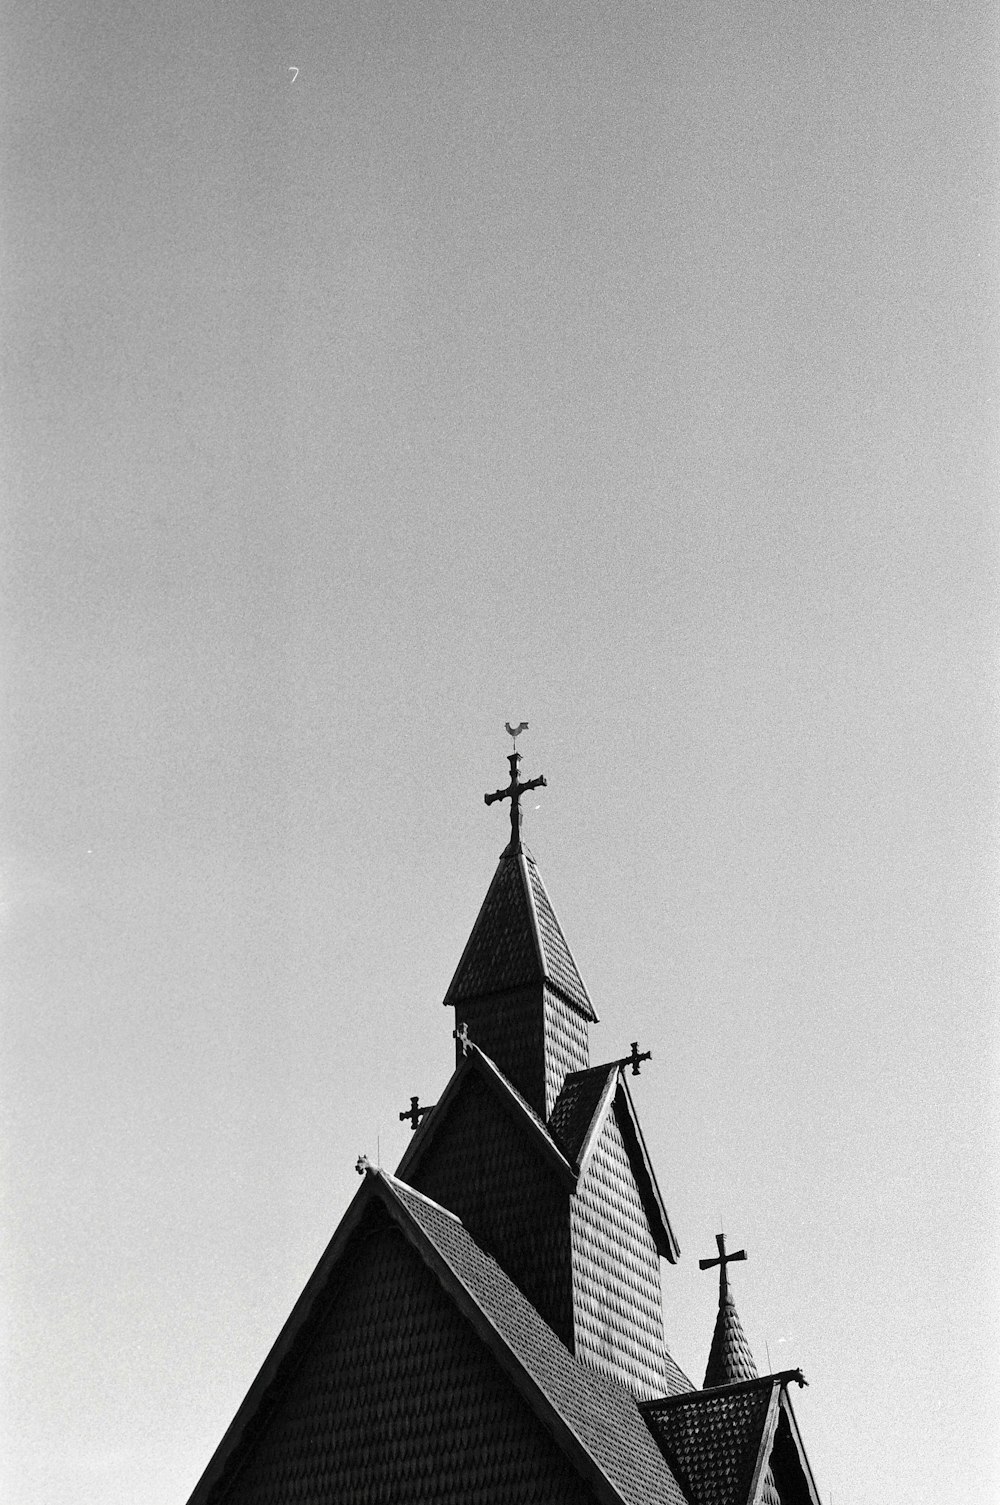 Fotografía en escala de grises de la iglesia